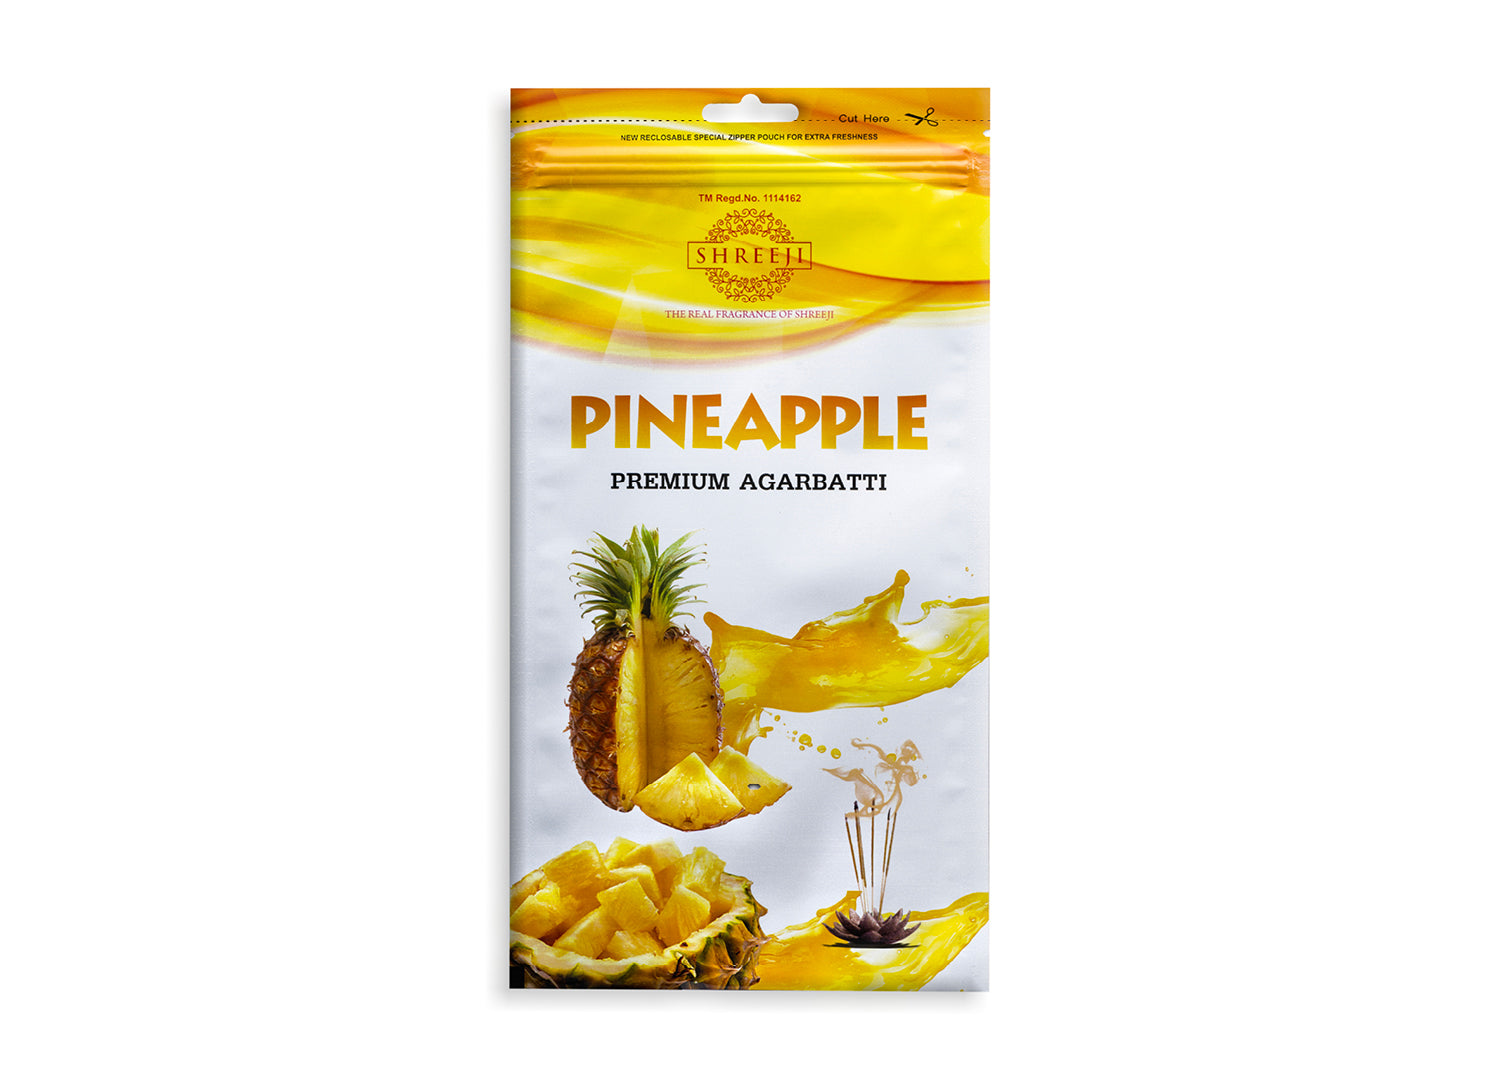  Pineapple Agarbatti